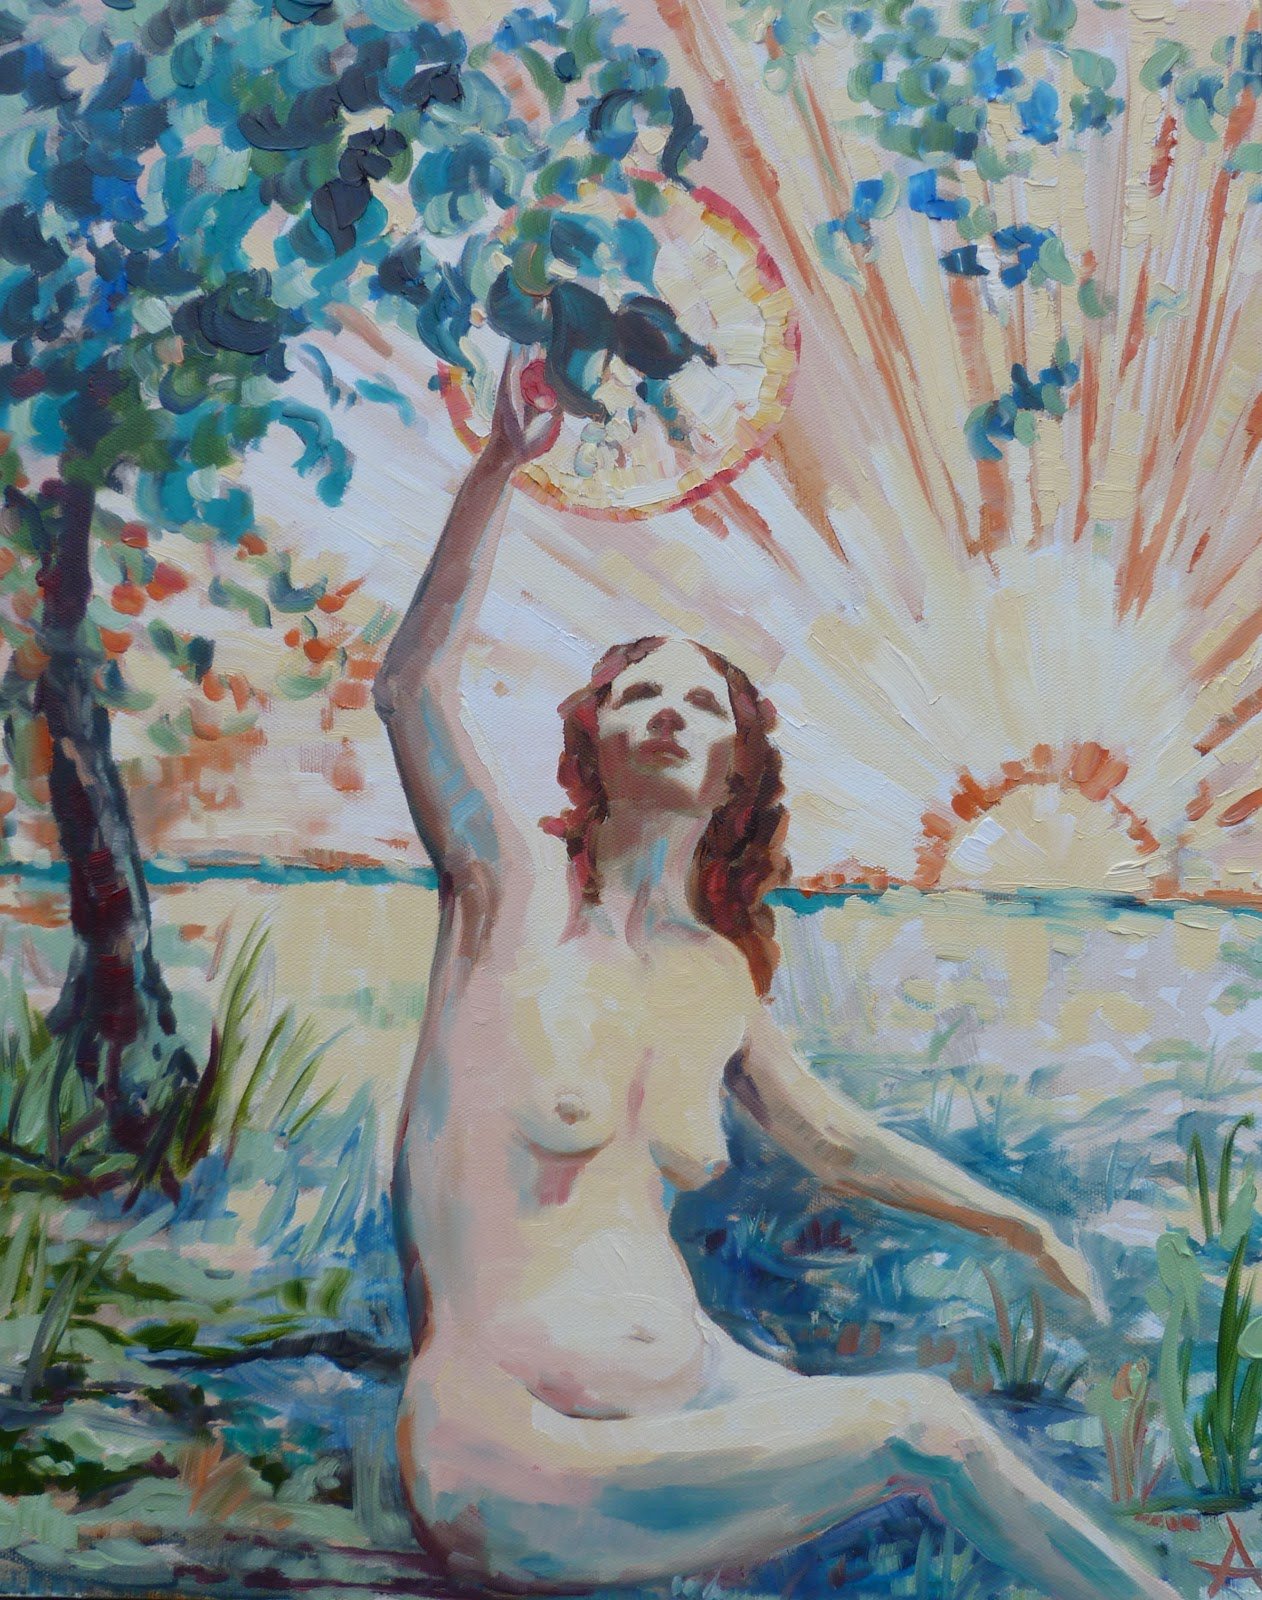 SOLD, Eve in the Garden, Copyright 2014 Hirschten